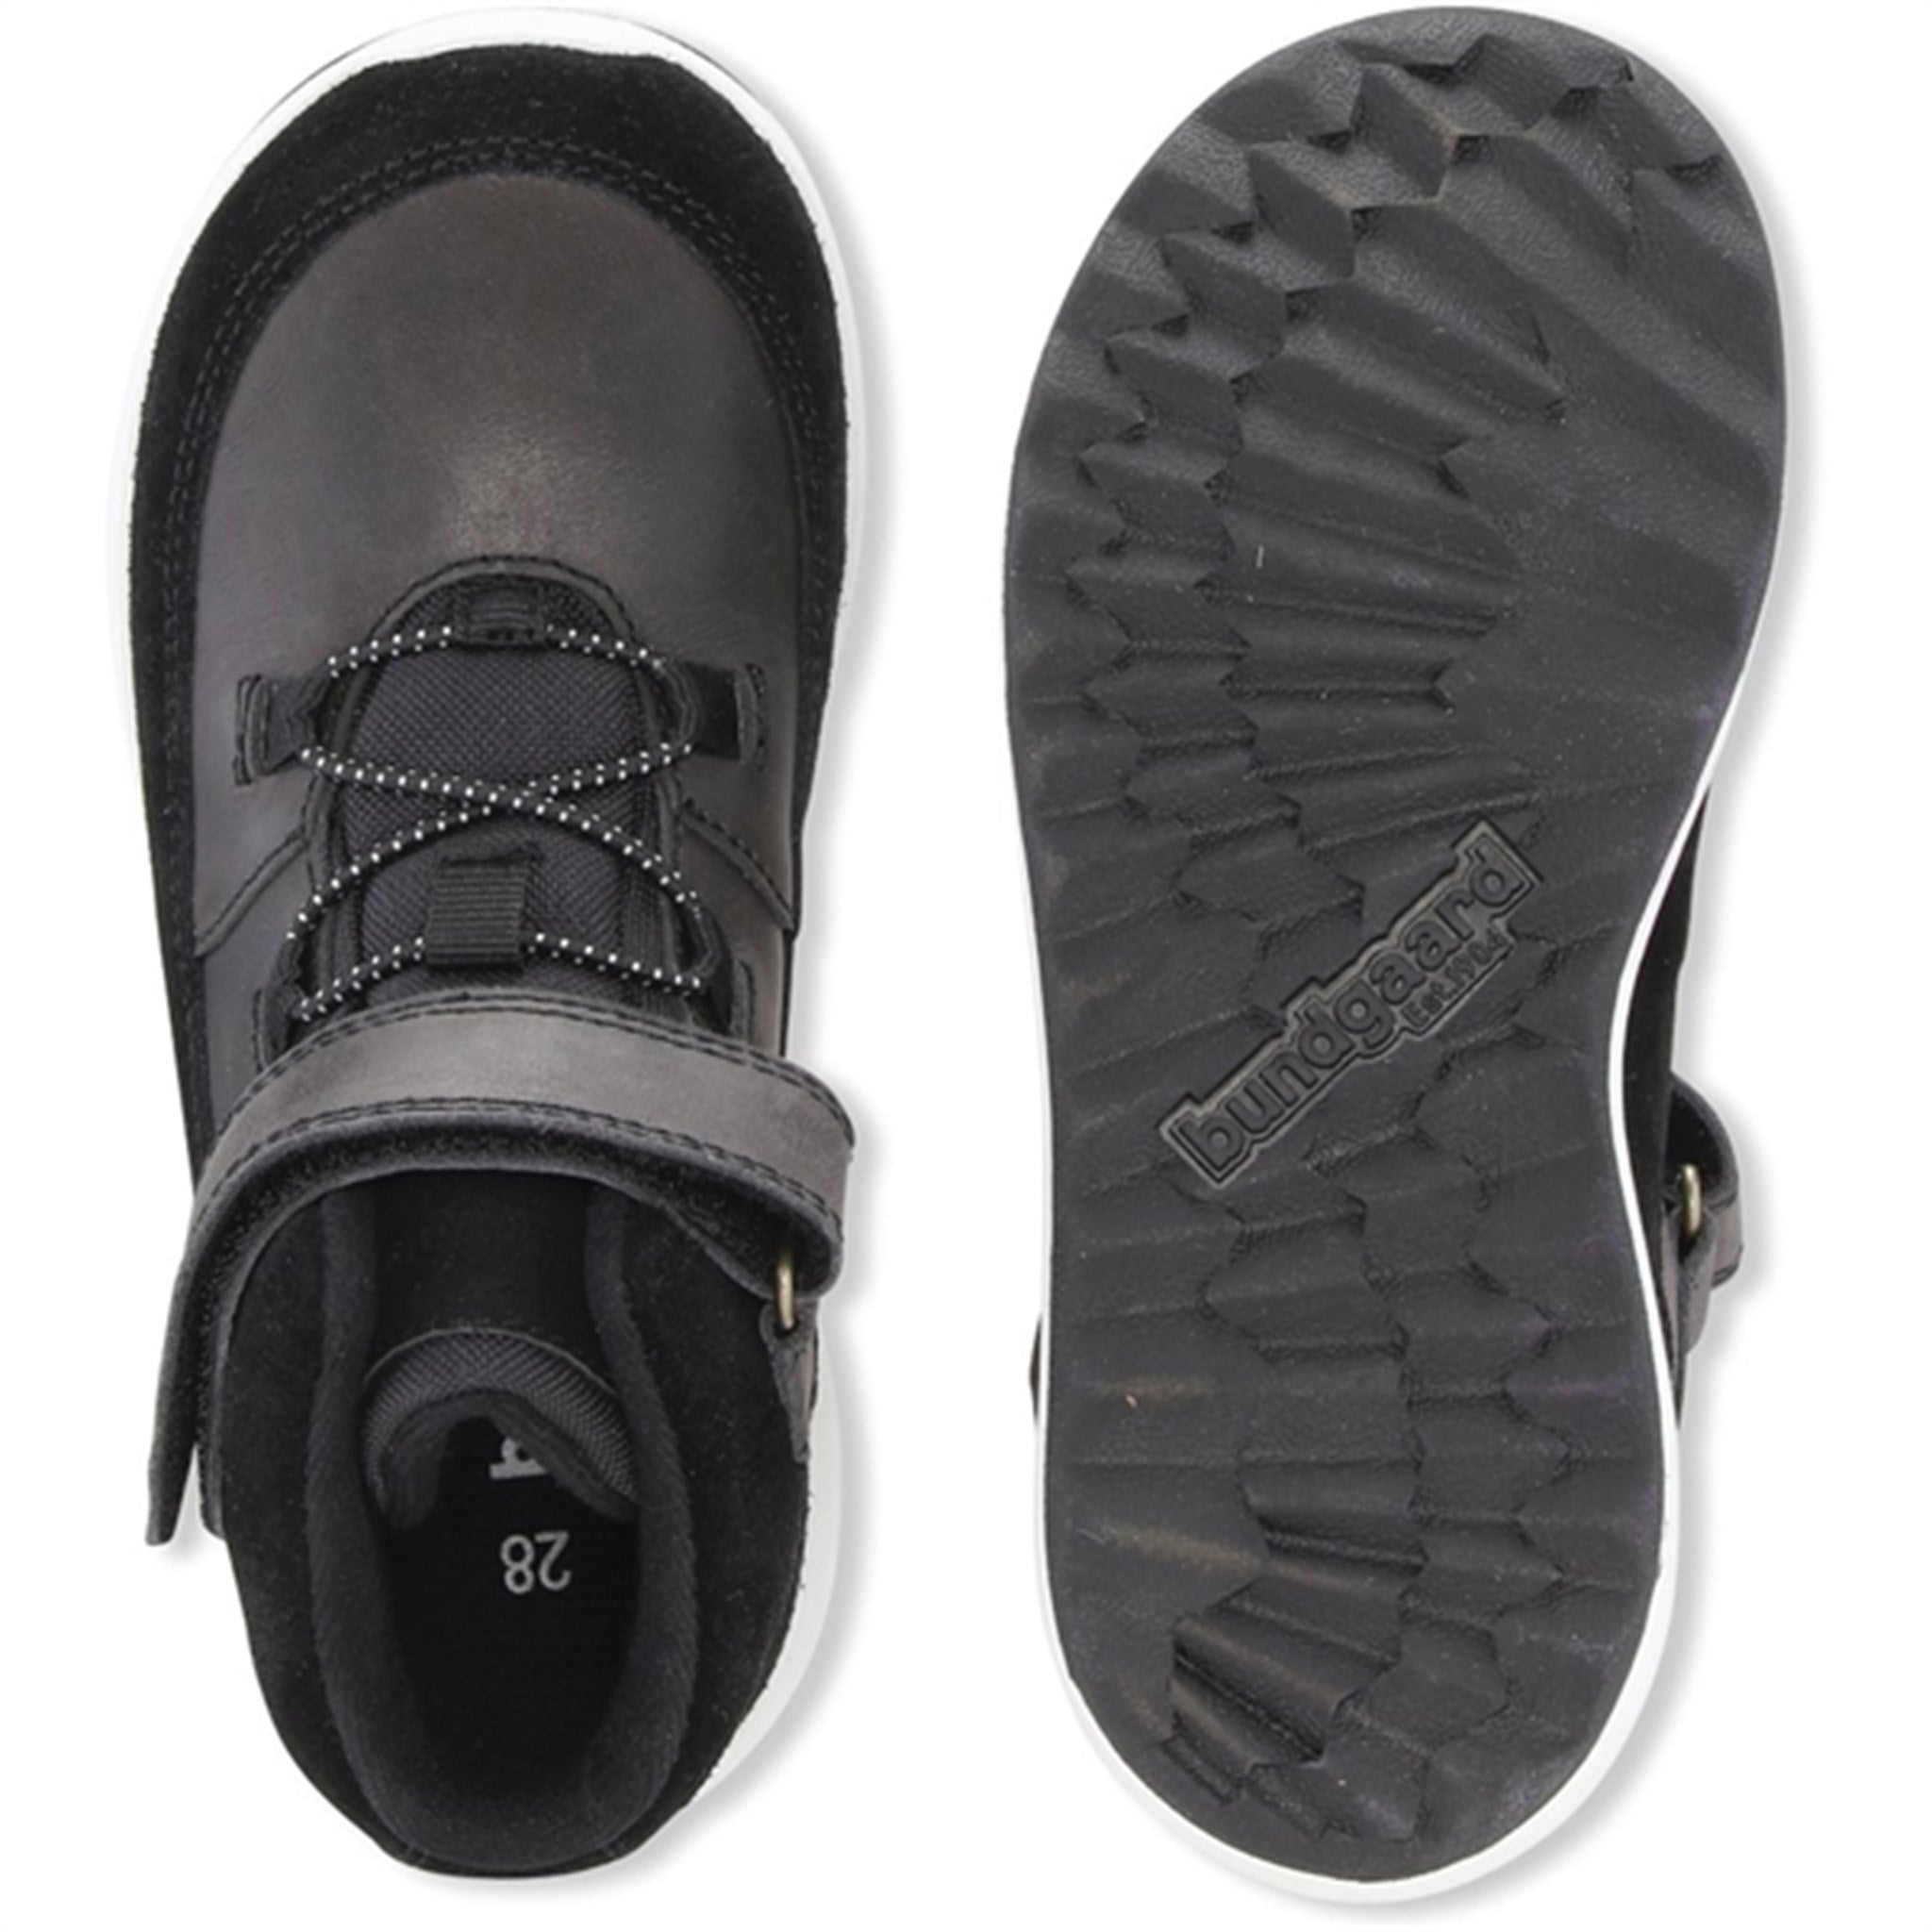 Bundgaard Dylan Lace Tex Shoes Black WS 2